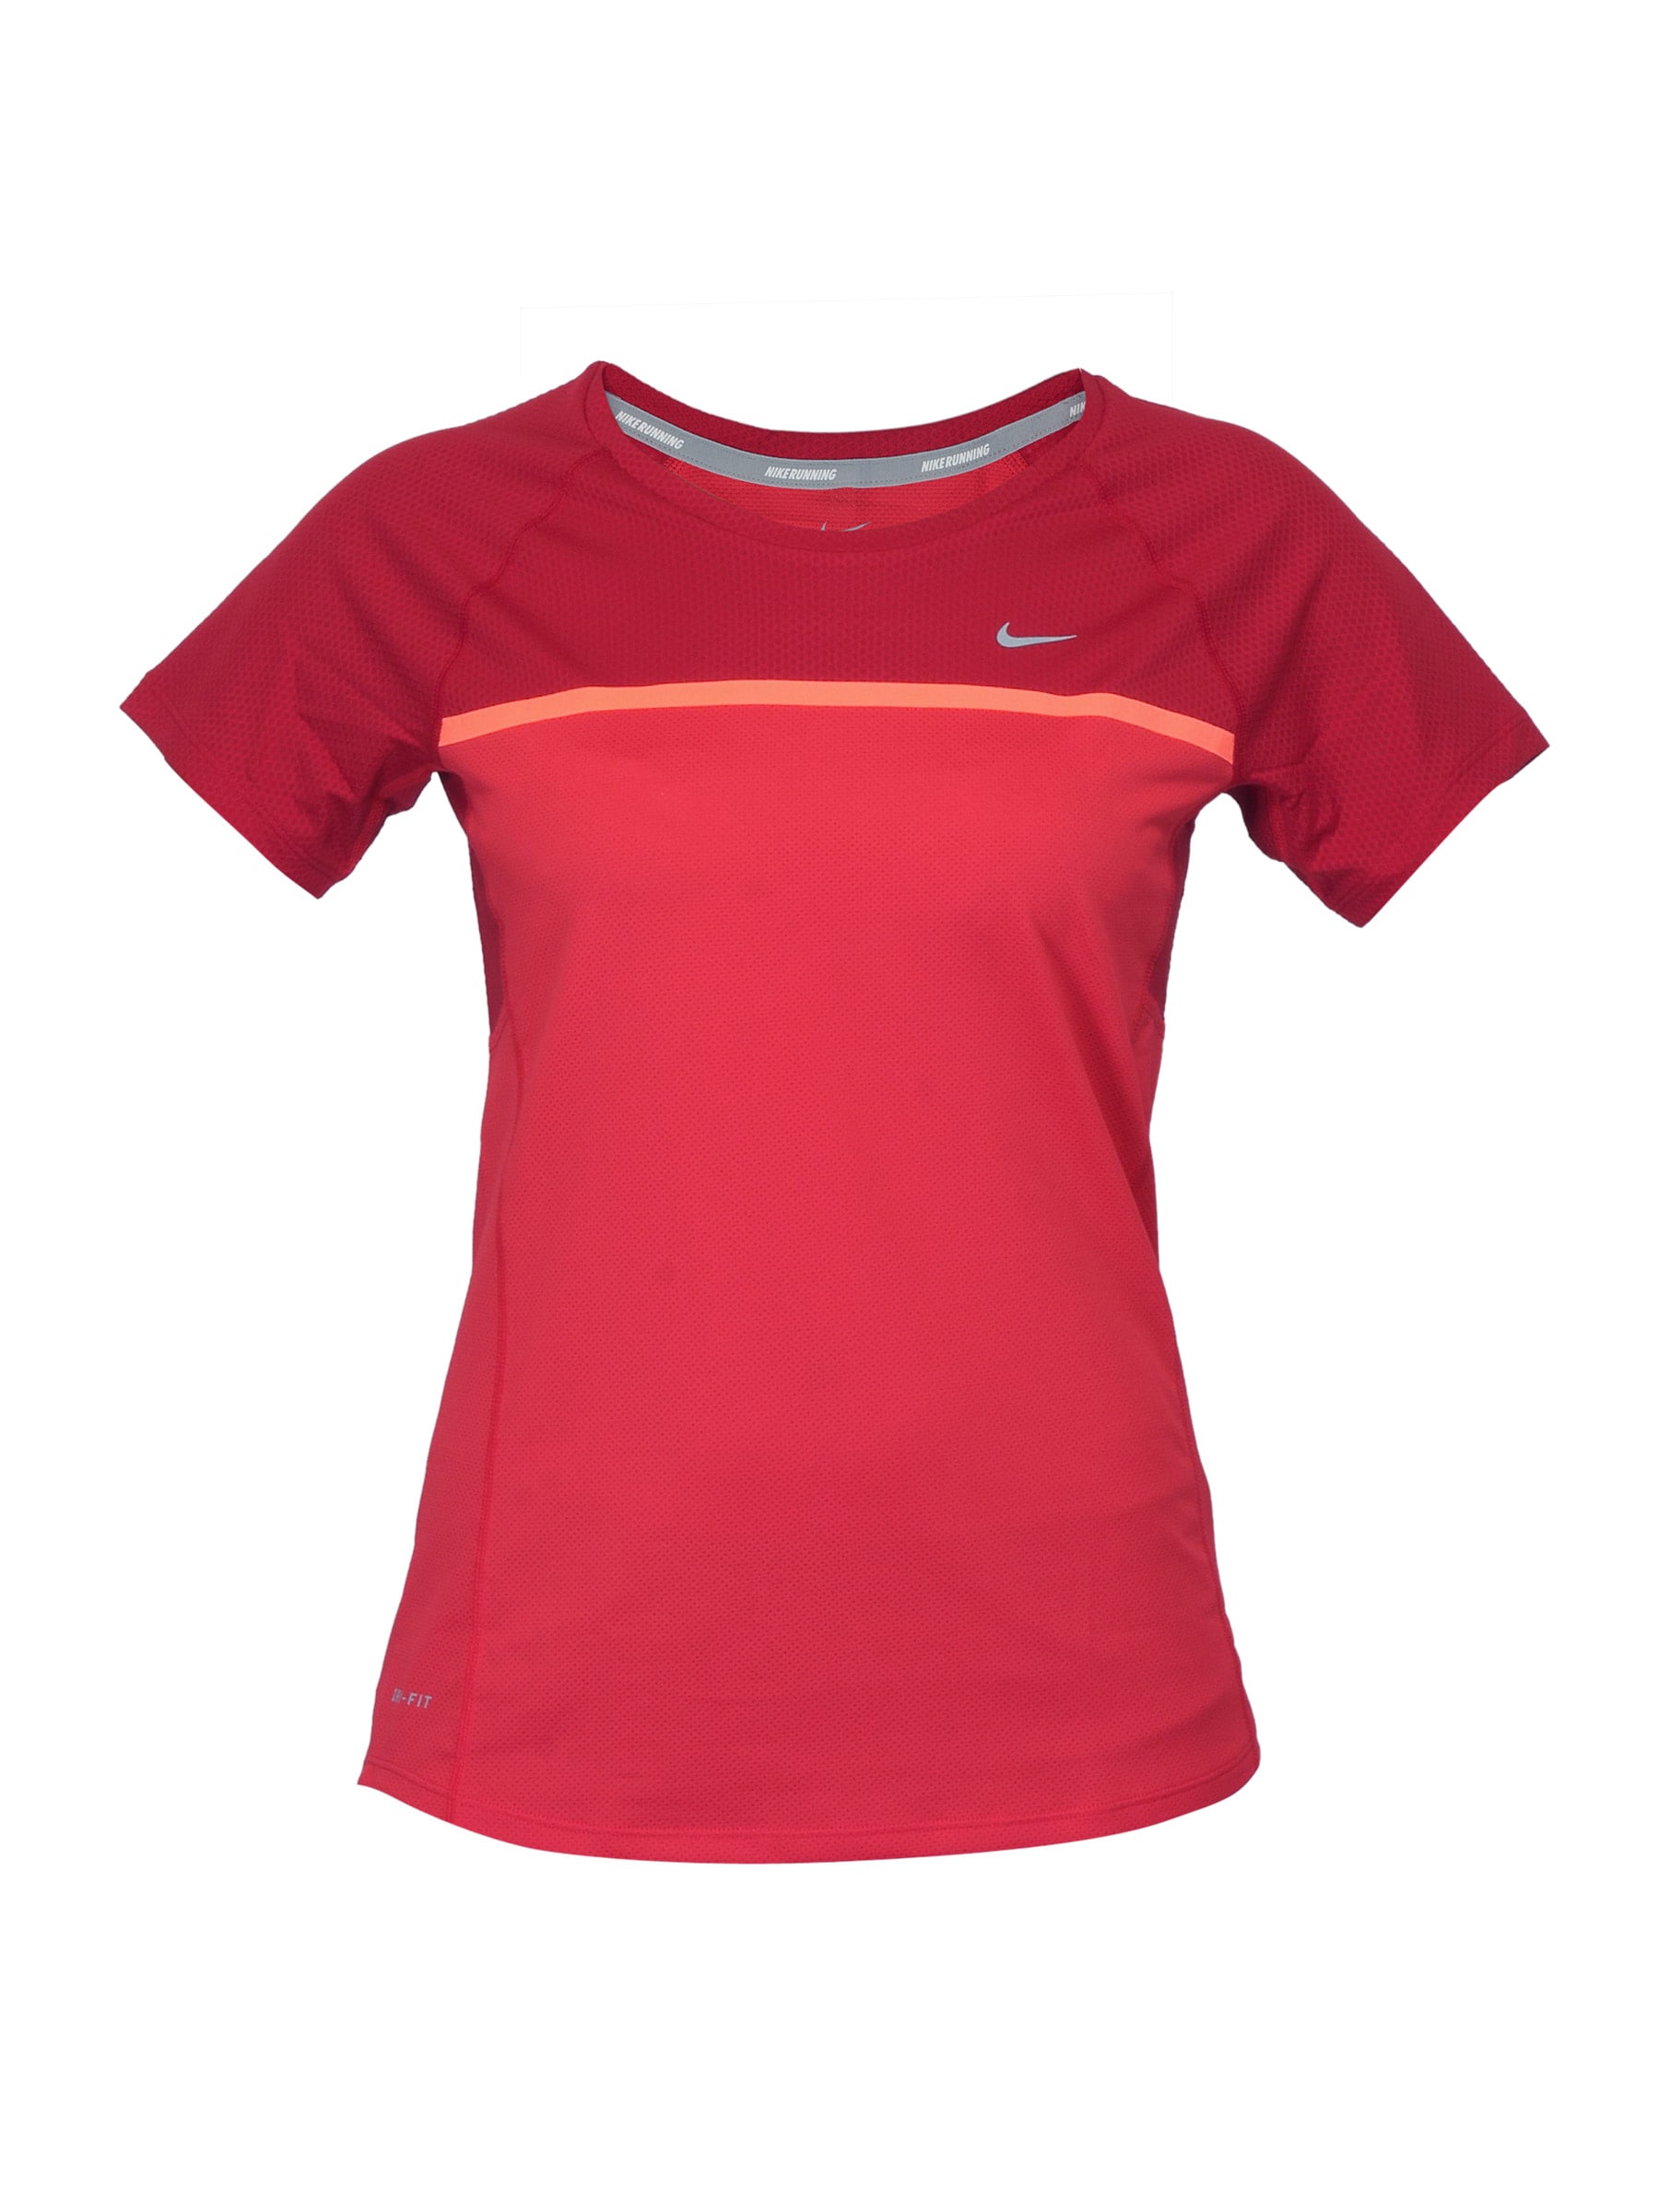 Nike Women Sphere Red T-shirt